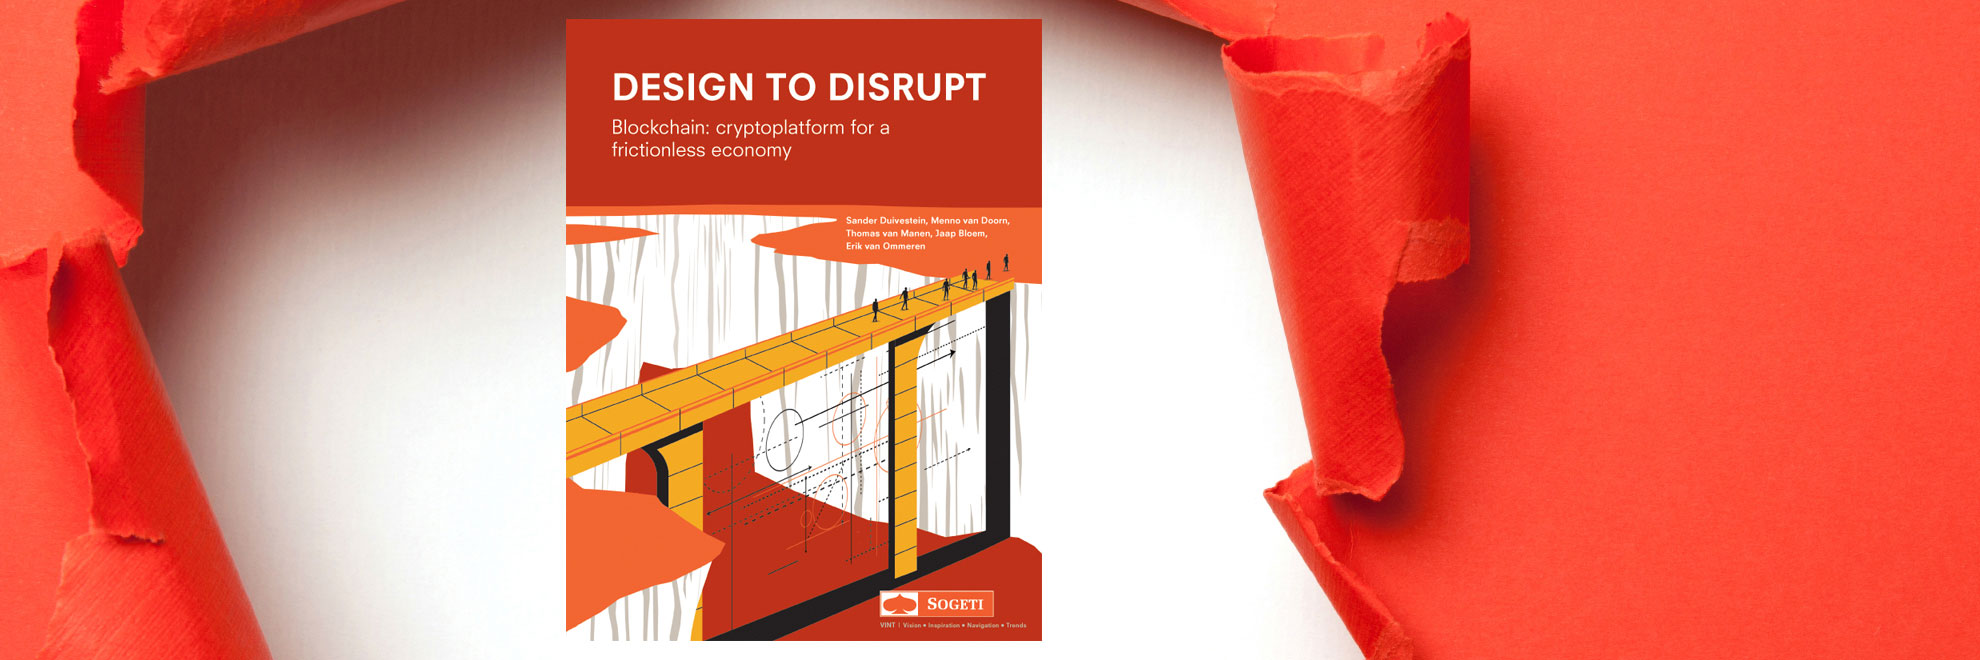 Design to Disrupt 3